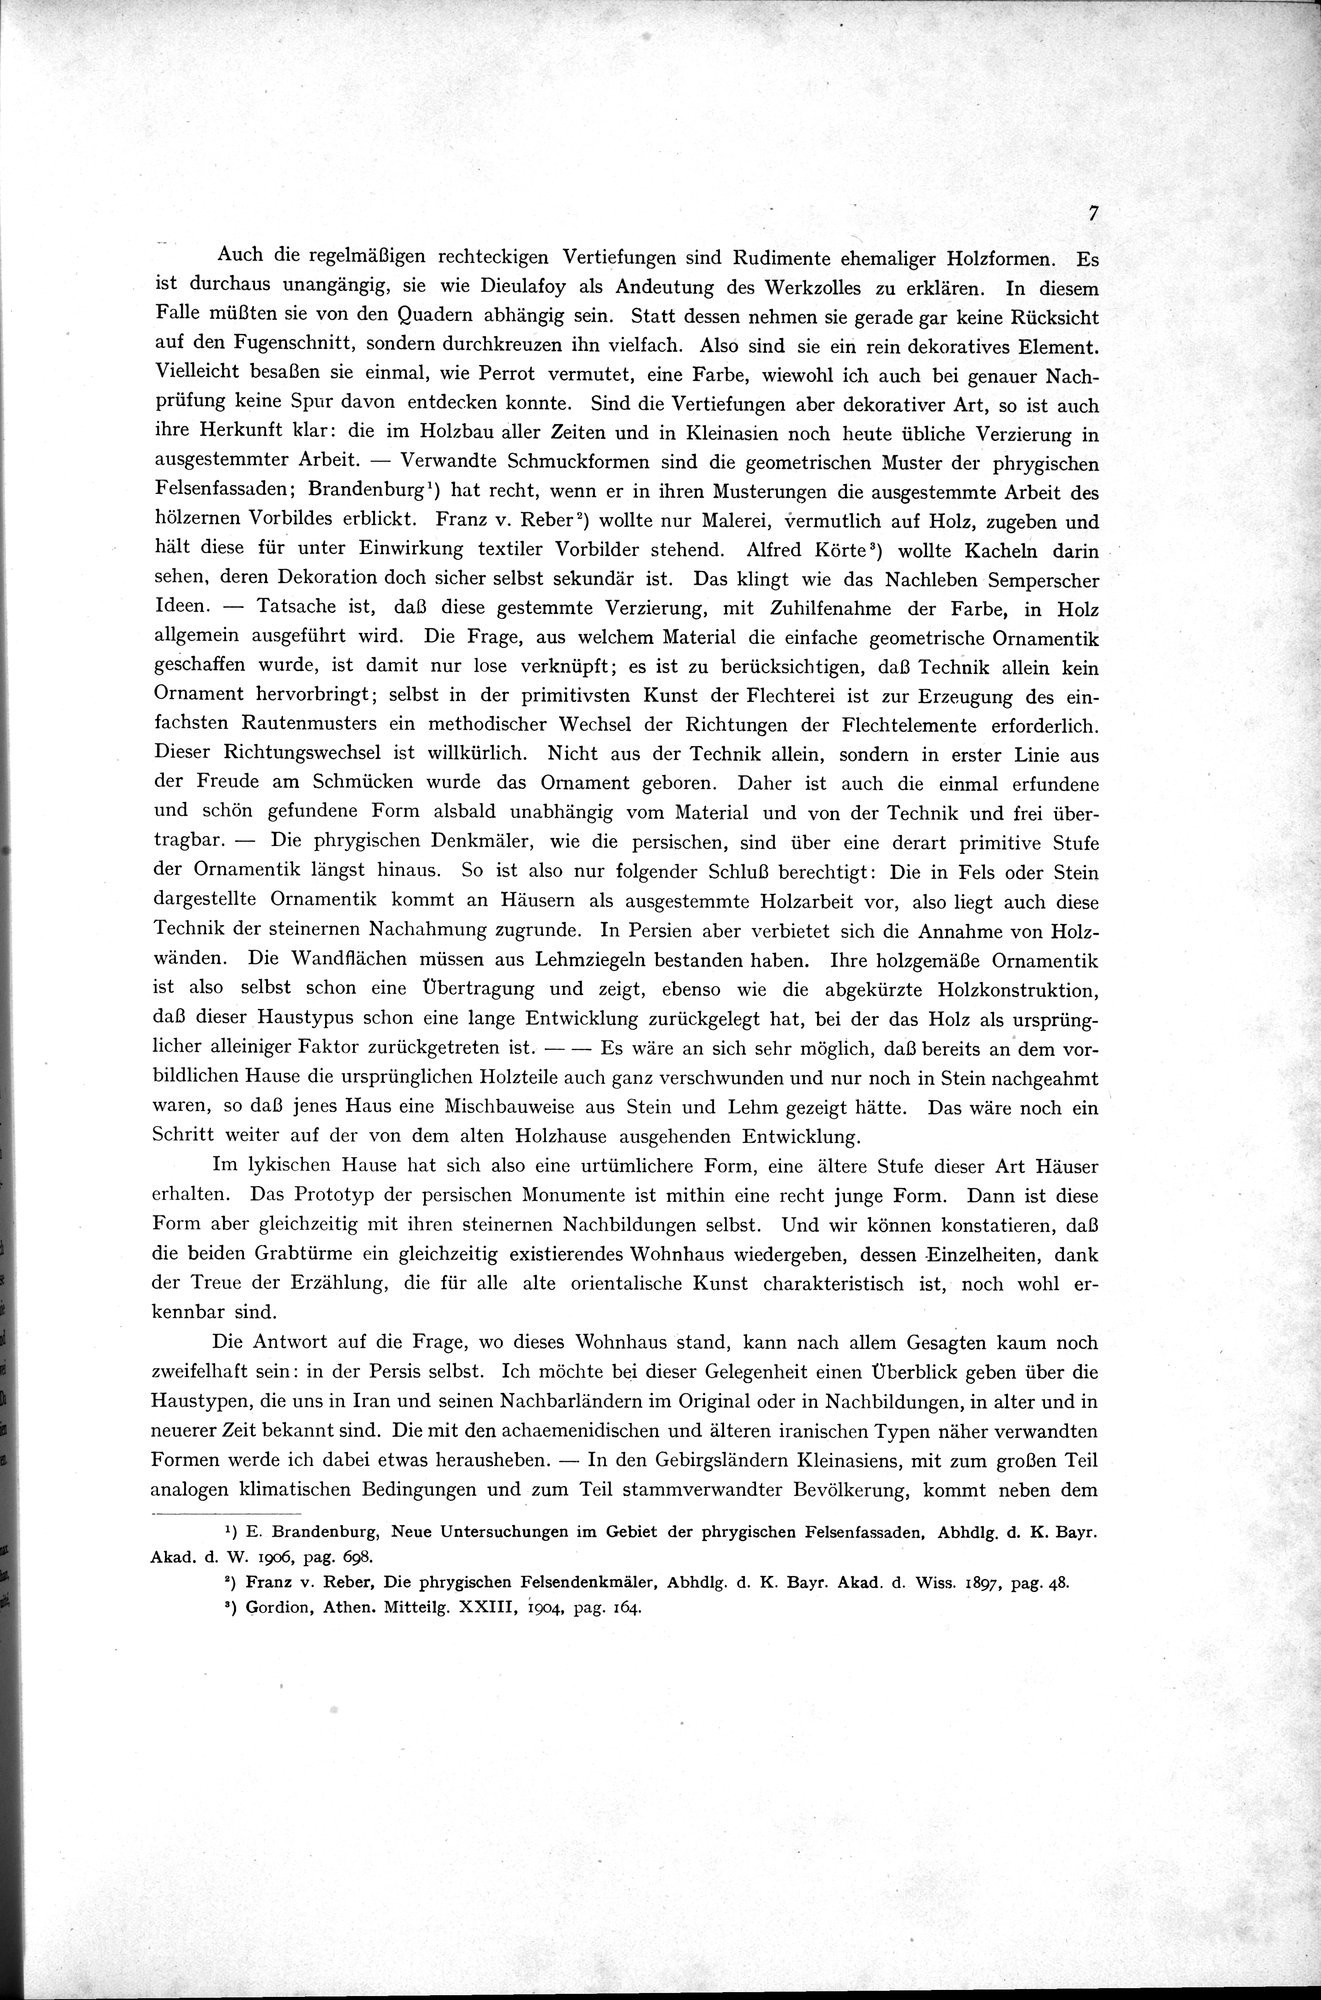 Iranische Felsreliefs : vol.1 / Page 19 (Grayscale High Resolution Image)